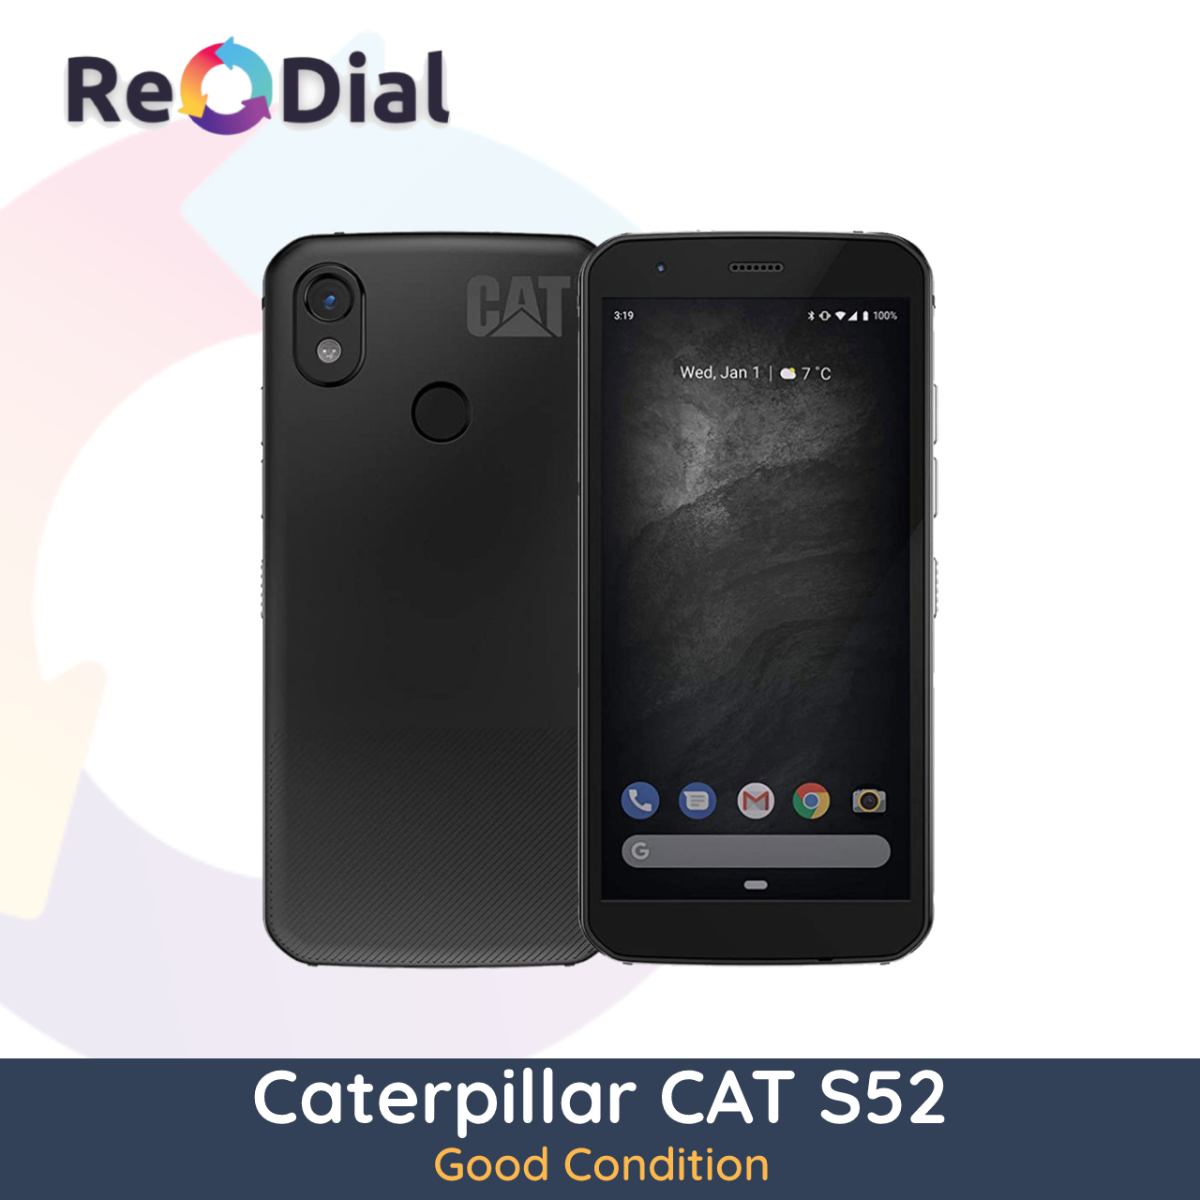 Caterpillar CAT S52 Heavy Duty Phone - Good Condition